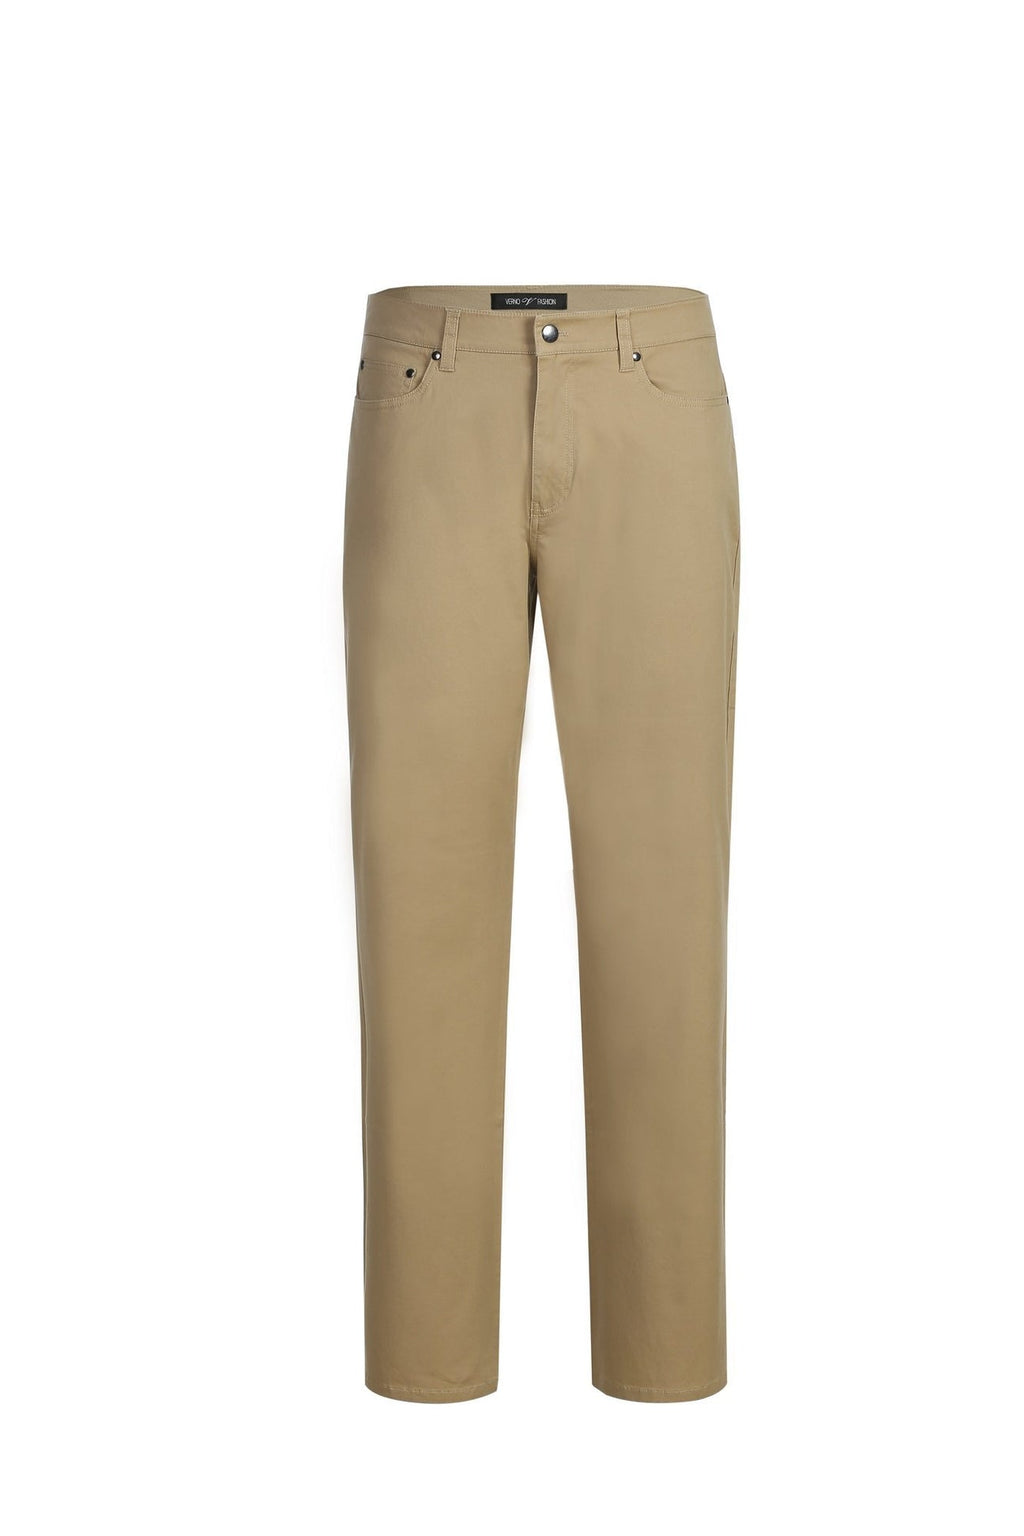 PELAGO Khaki 5-Pocket Cotton Stretch Washed Flat Front Chino Pants PF20-21